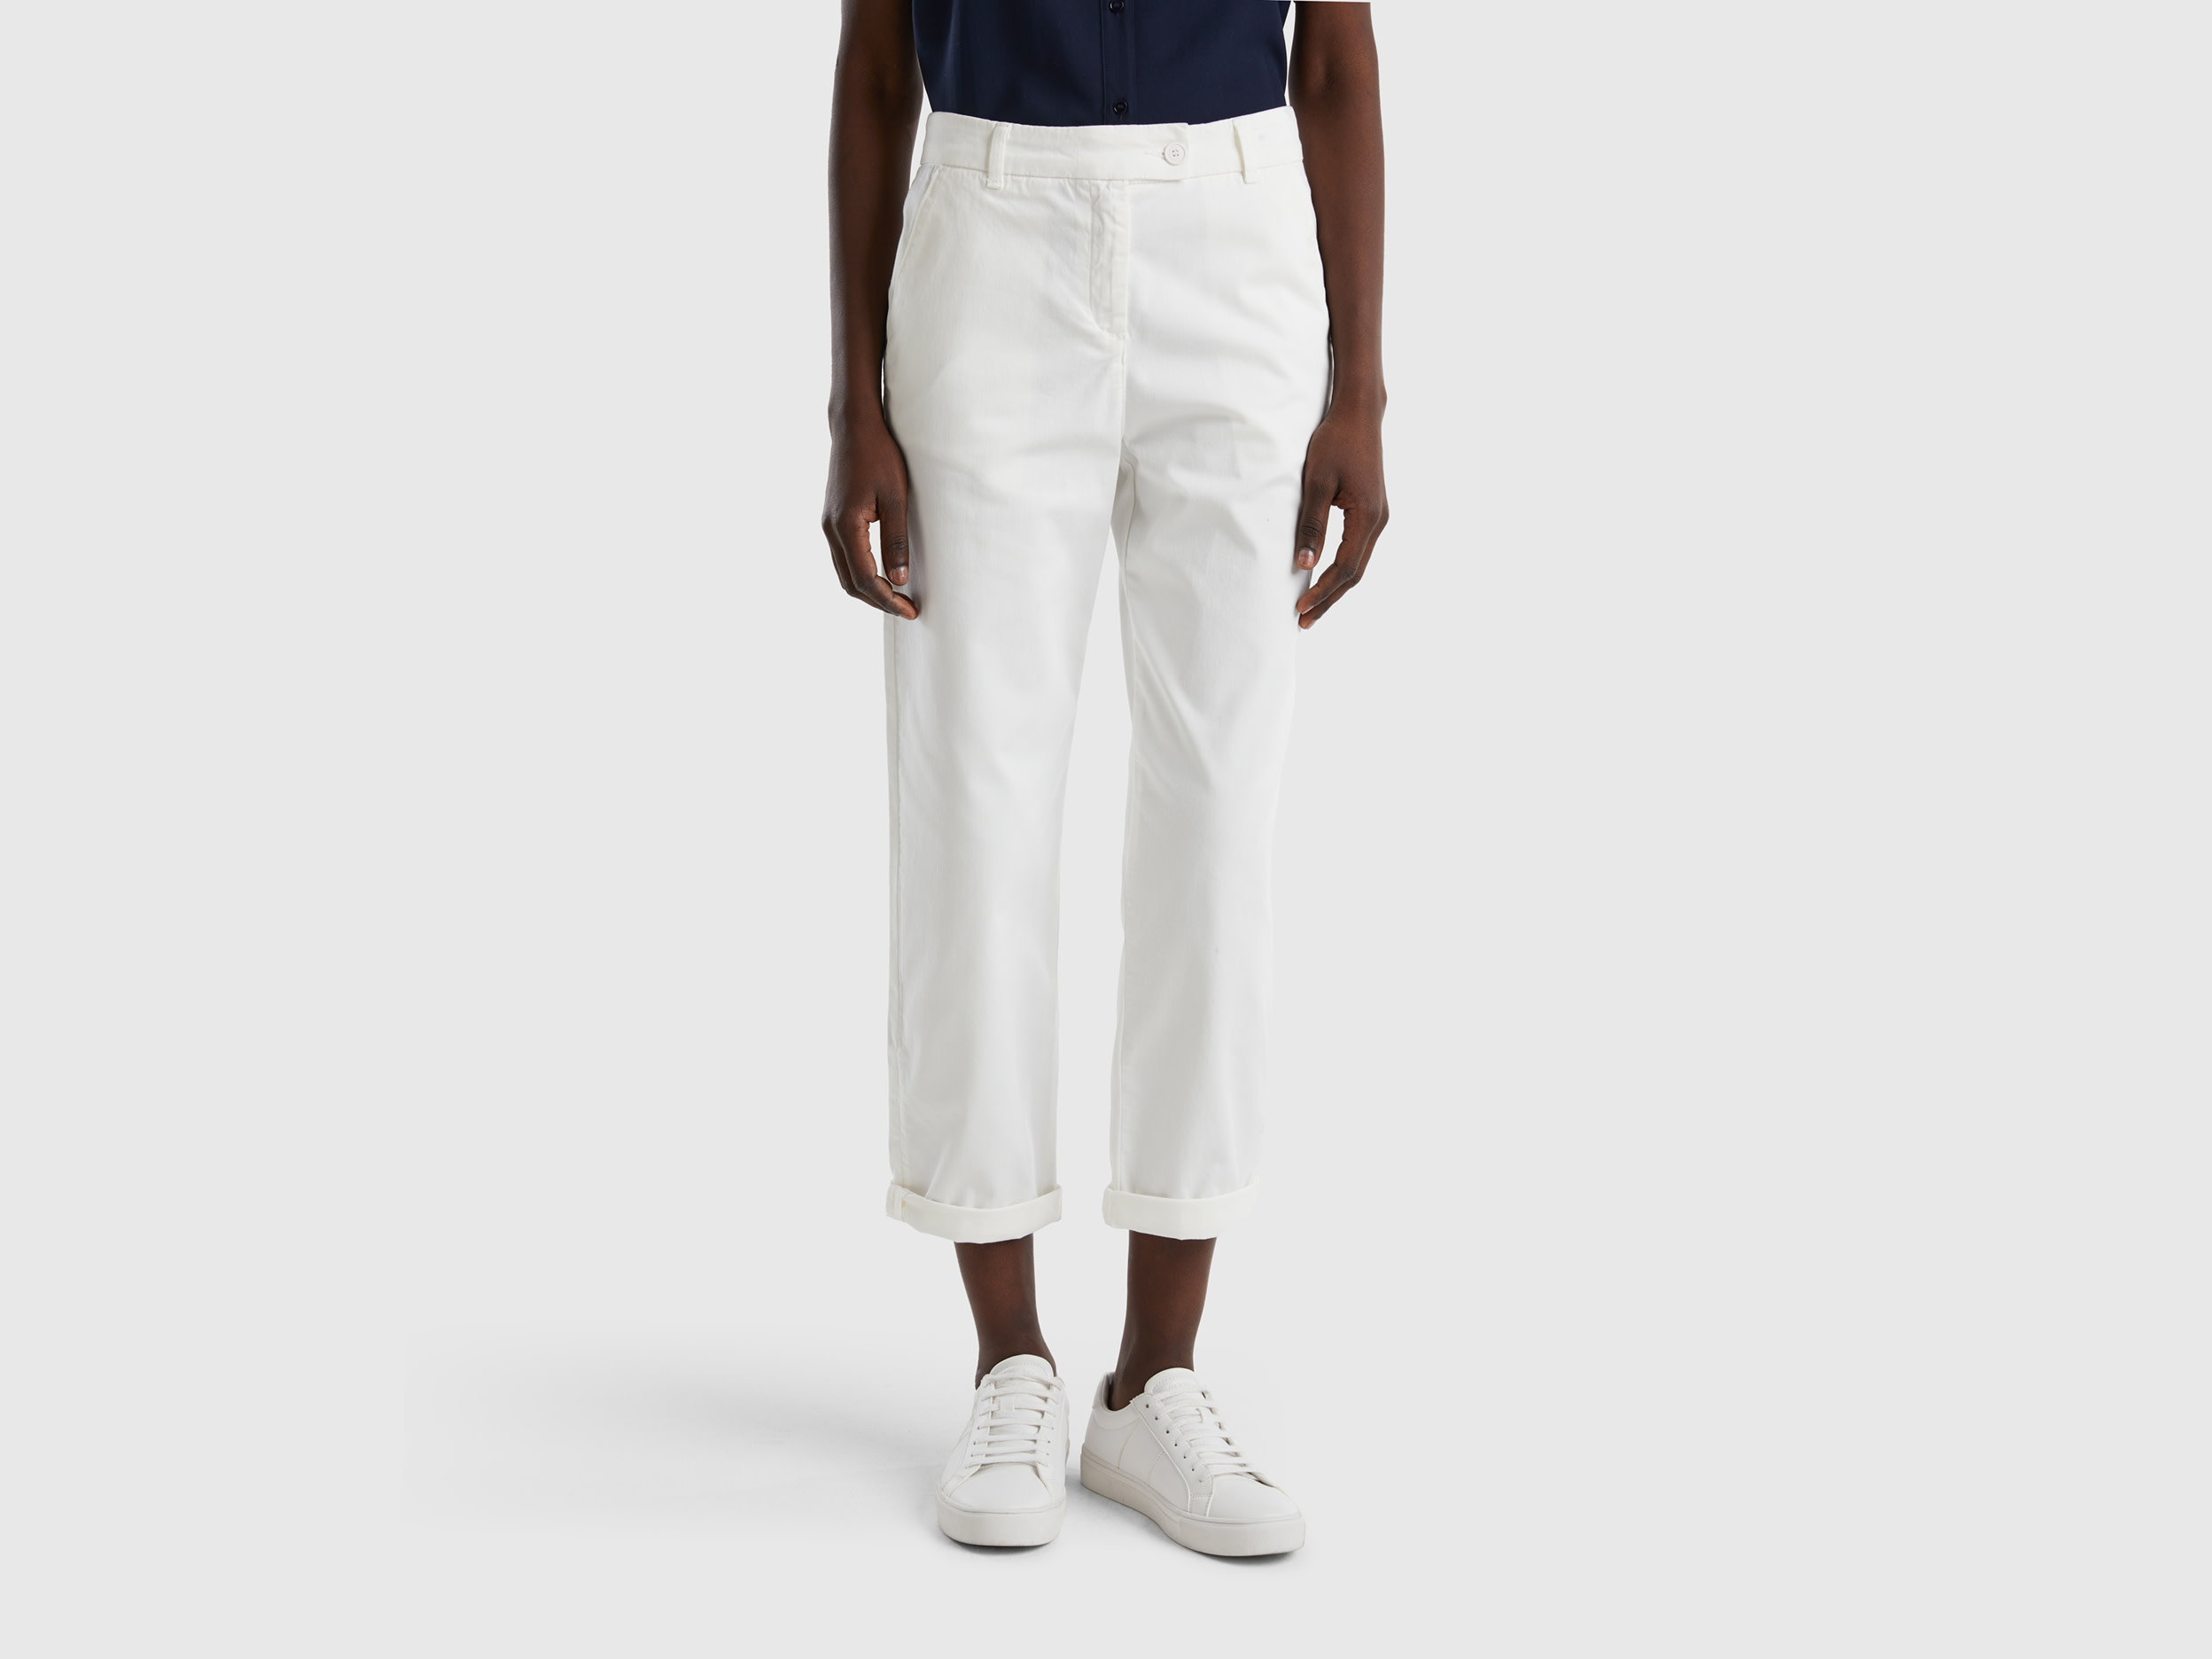 Benetton, Stretch Cotton Chino Trousers, size 10, Creamy White, Women